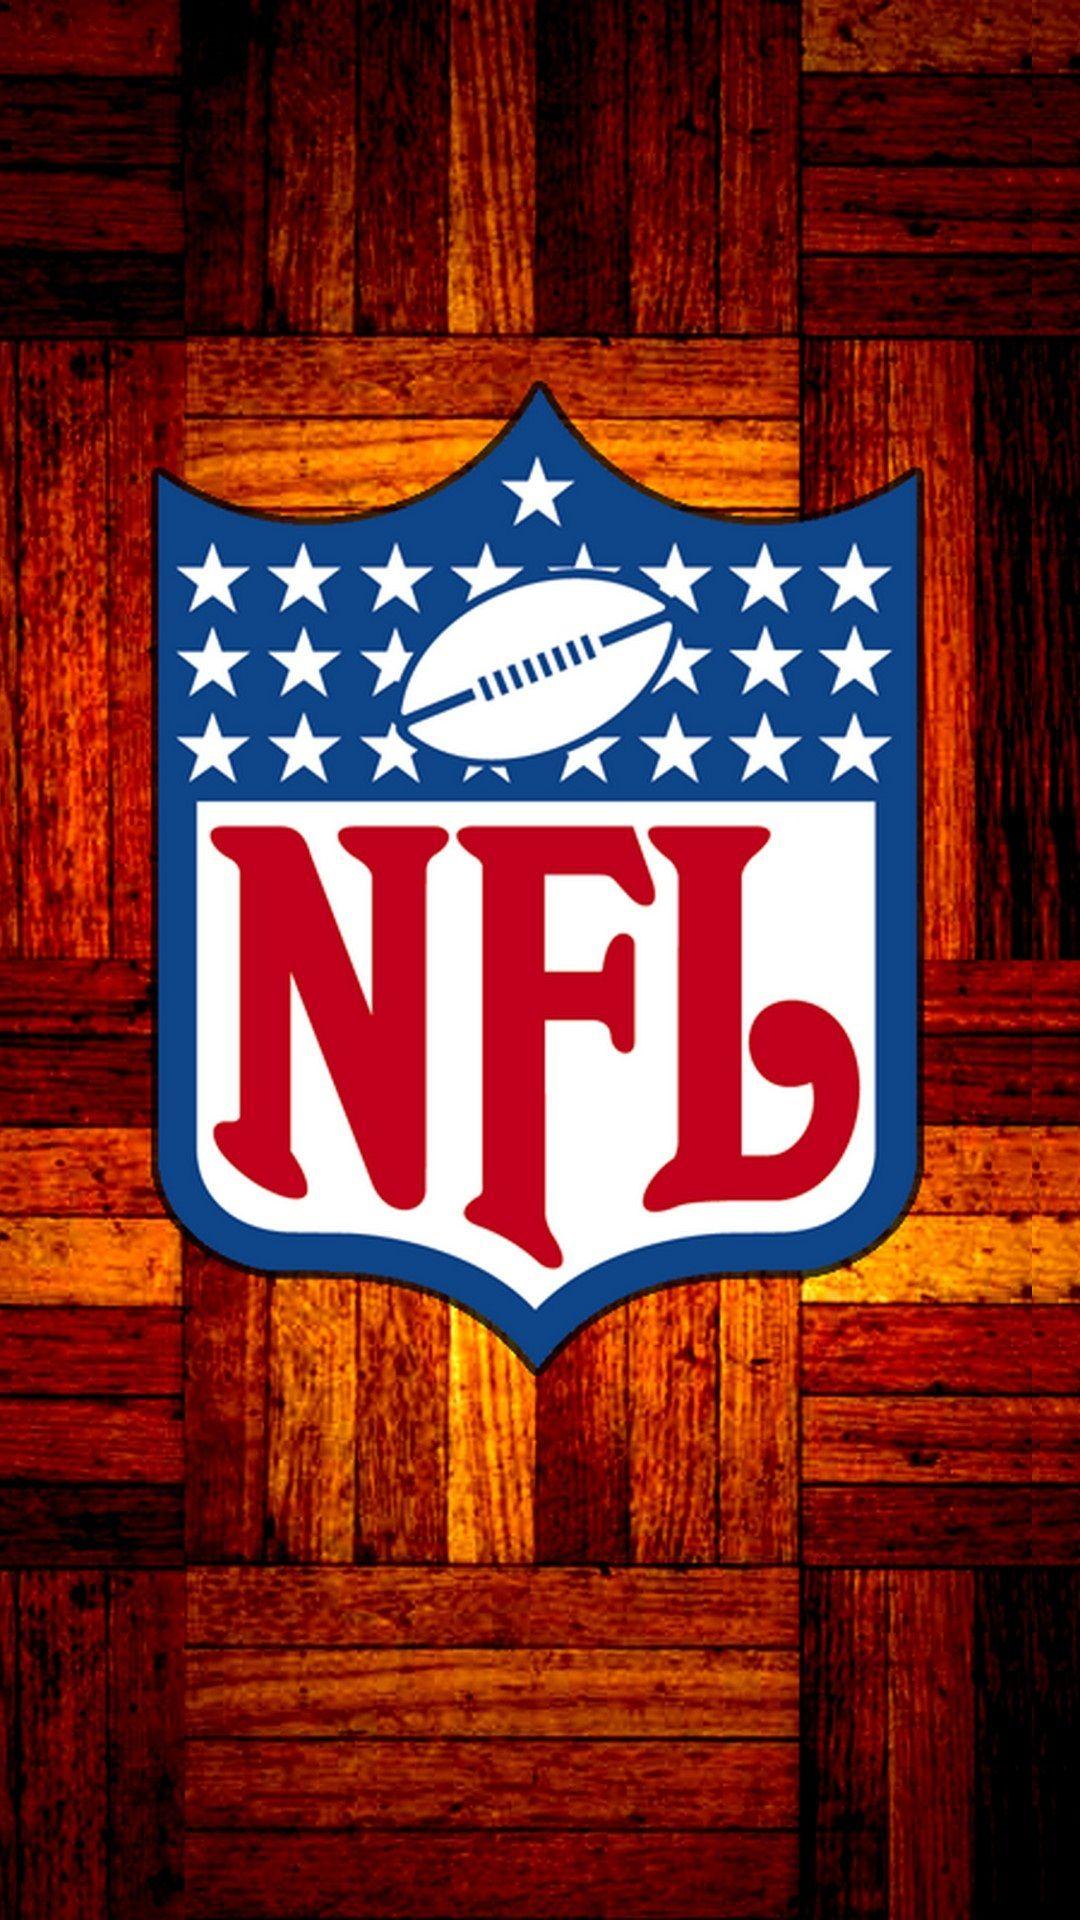 NFL HD Wallpaper For iPhone 2018 Full size Football Wallpaper